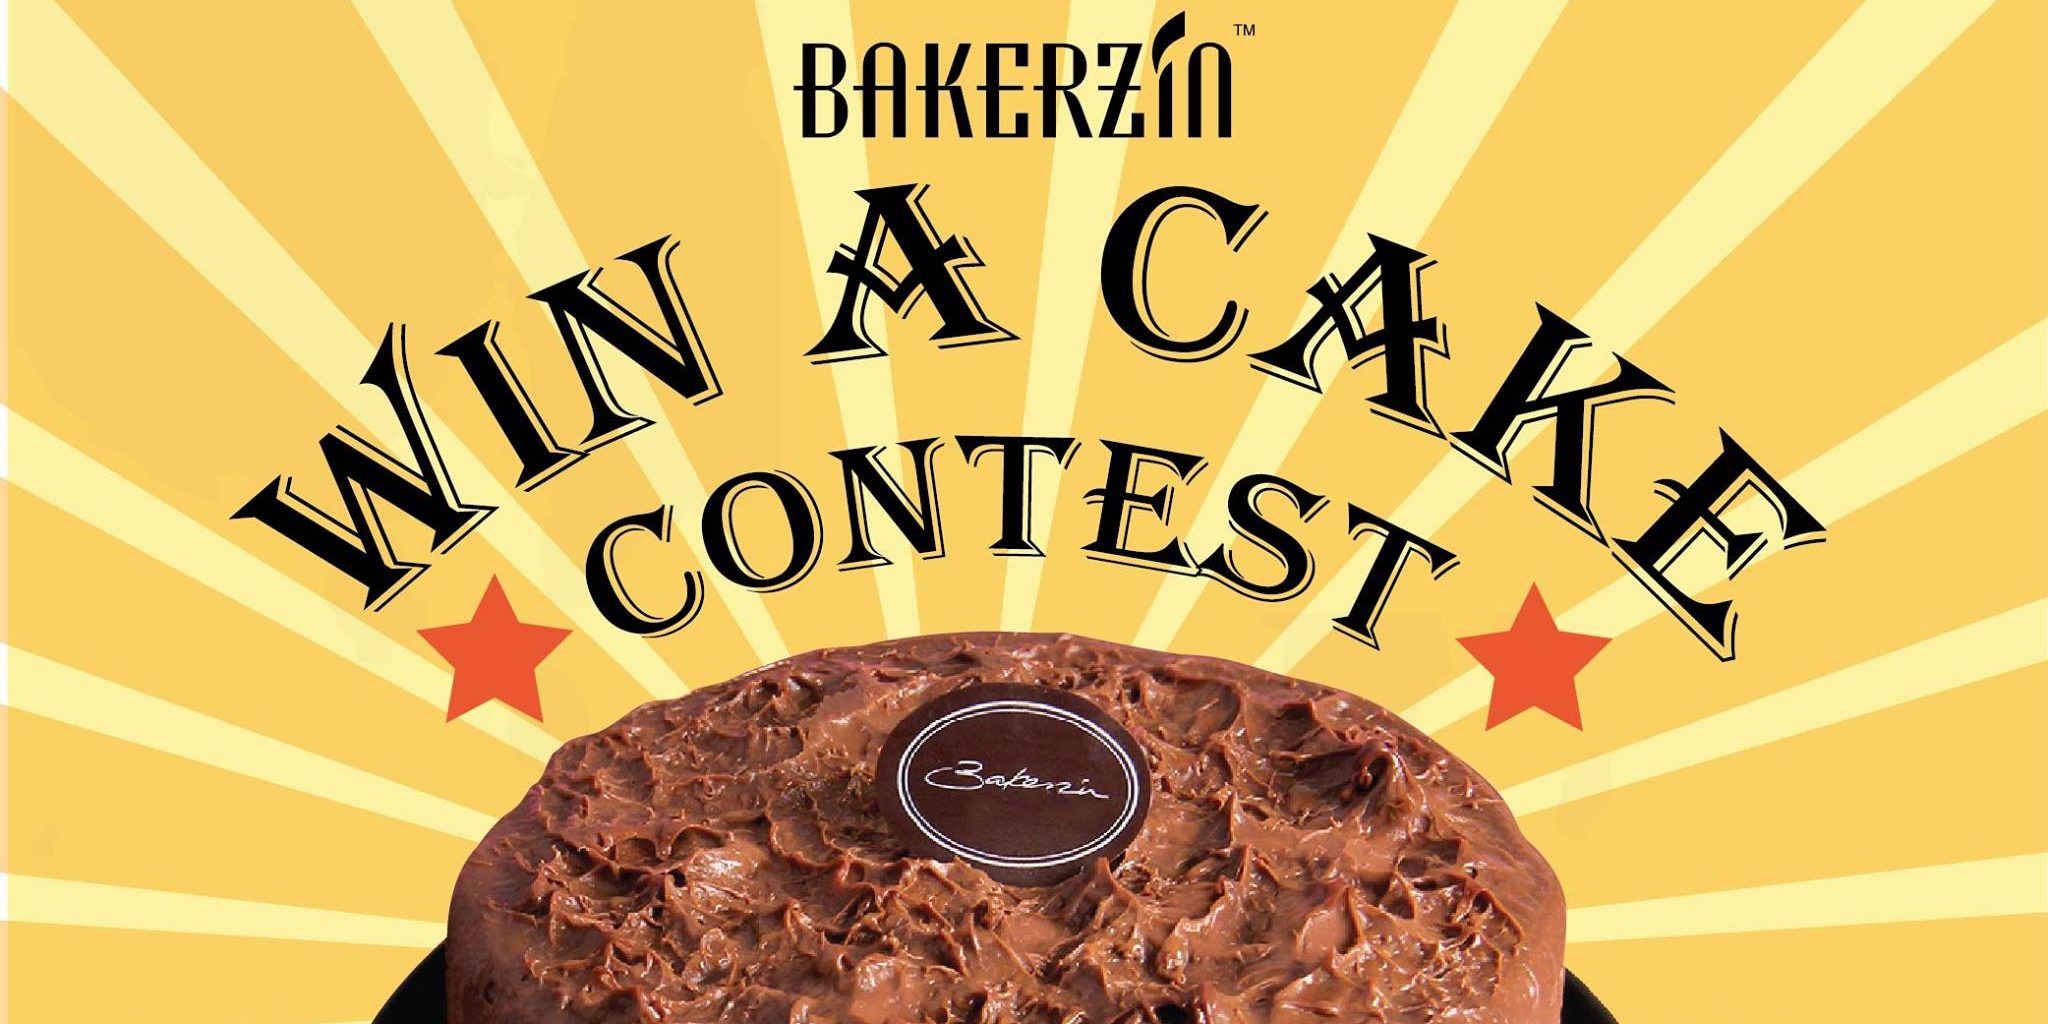 Bakerzin Singapore Win A Cake Facebook Contest ends 27 Feb 2017